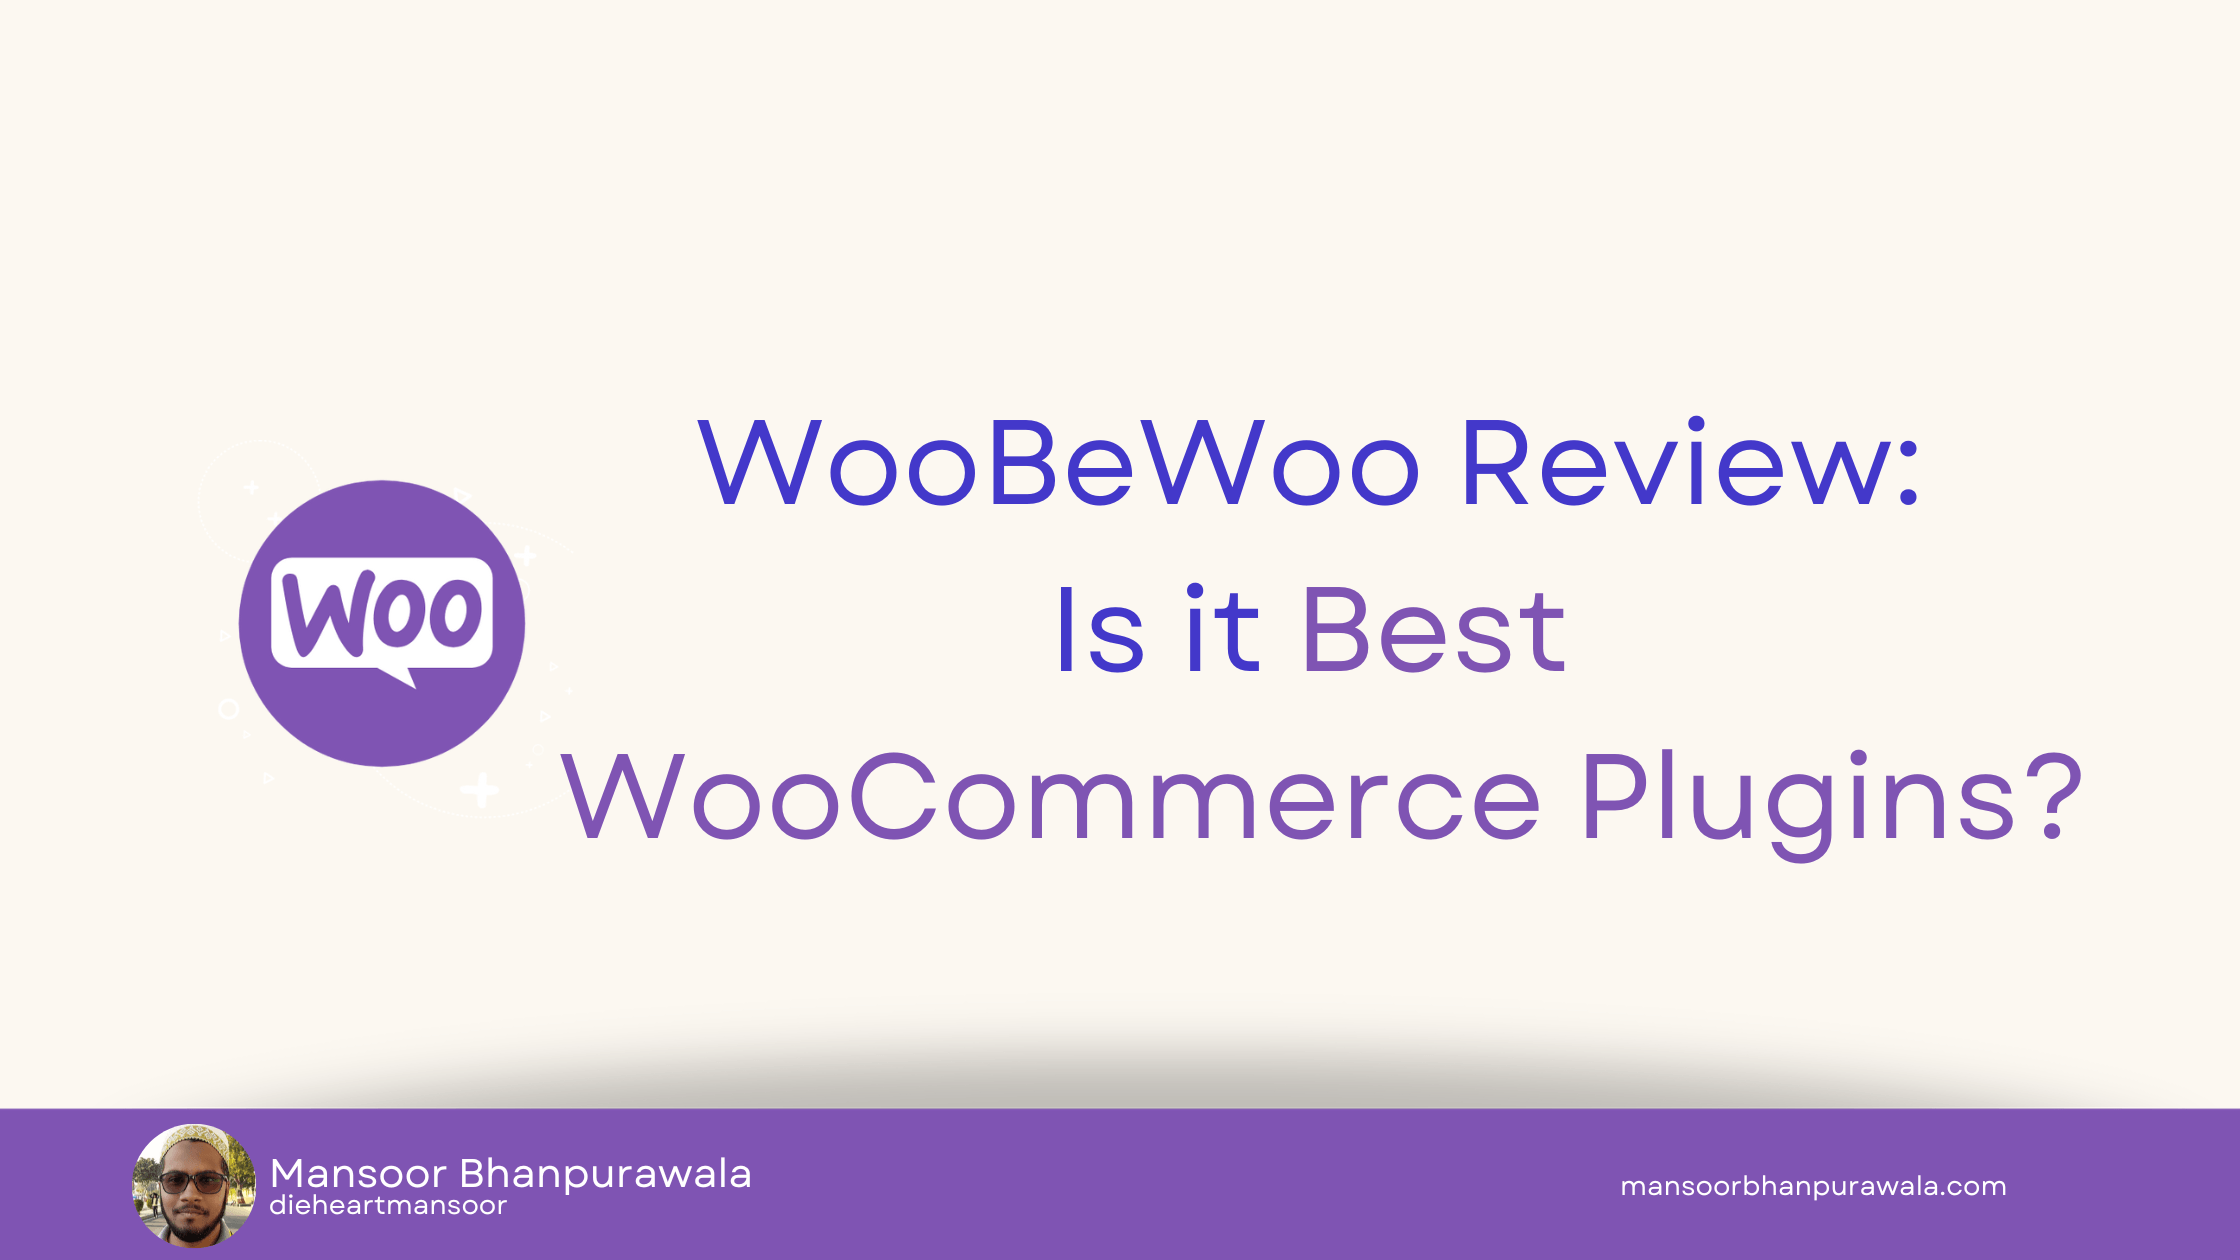 WooBeWoo Review